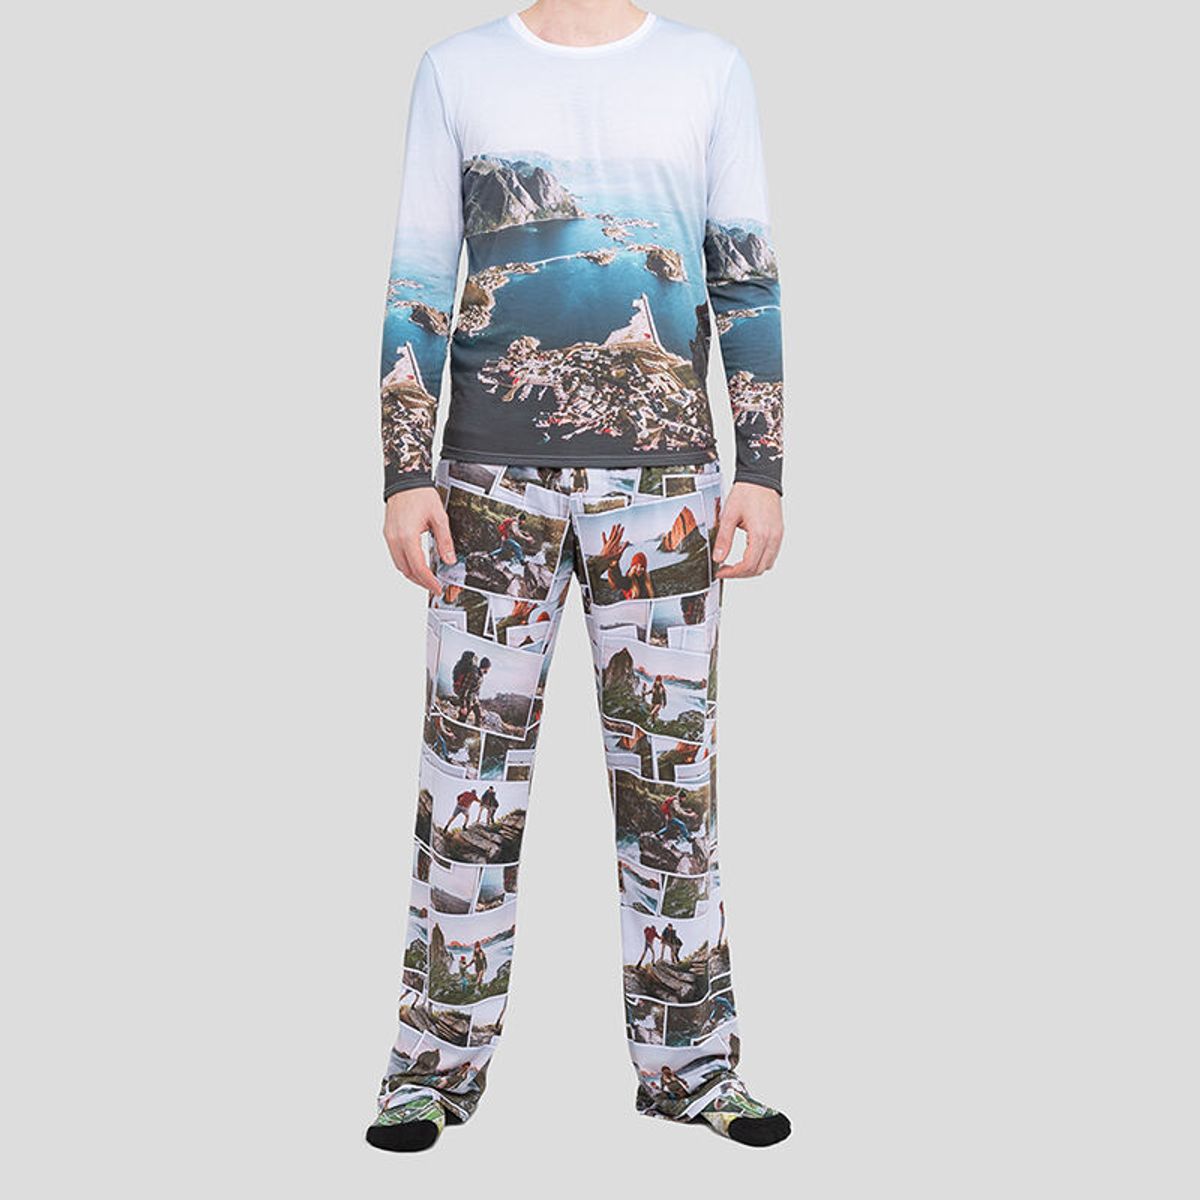 Personalized Pajama Set. Custom Pajama Set.